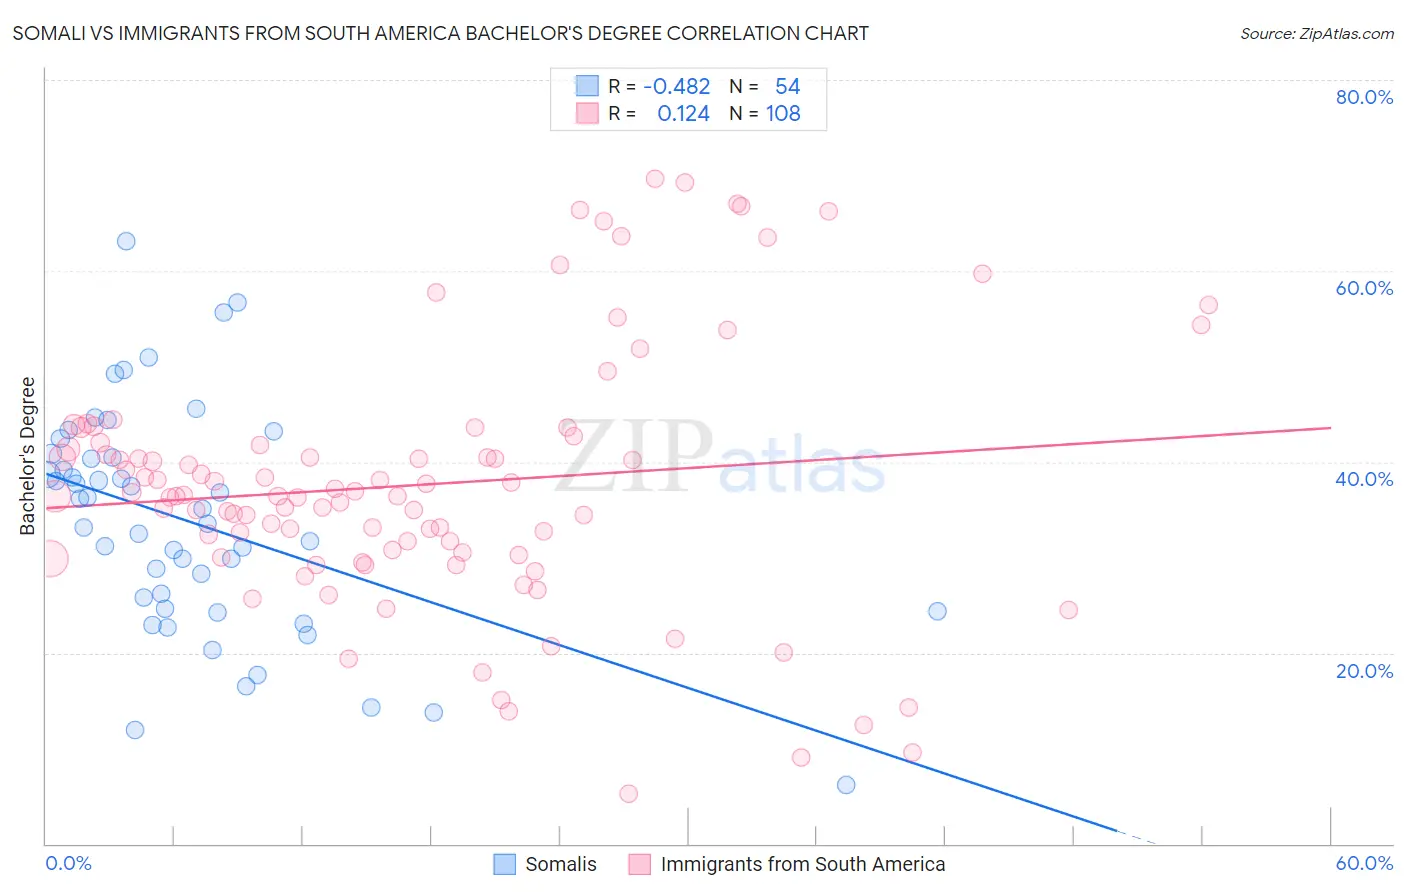 Somali vs Immigrants from South America Bachelor's Degree